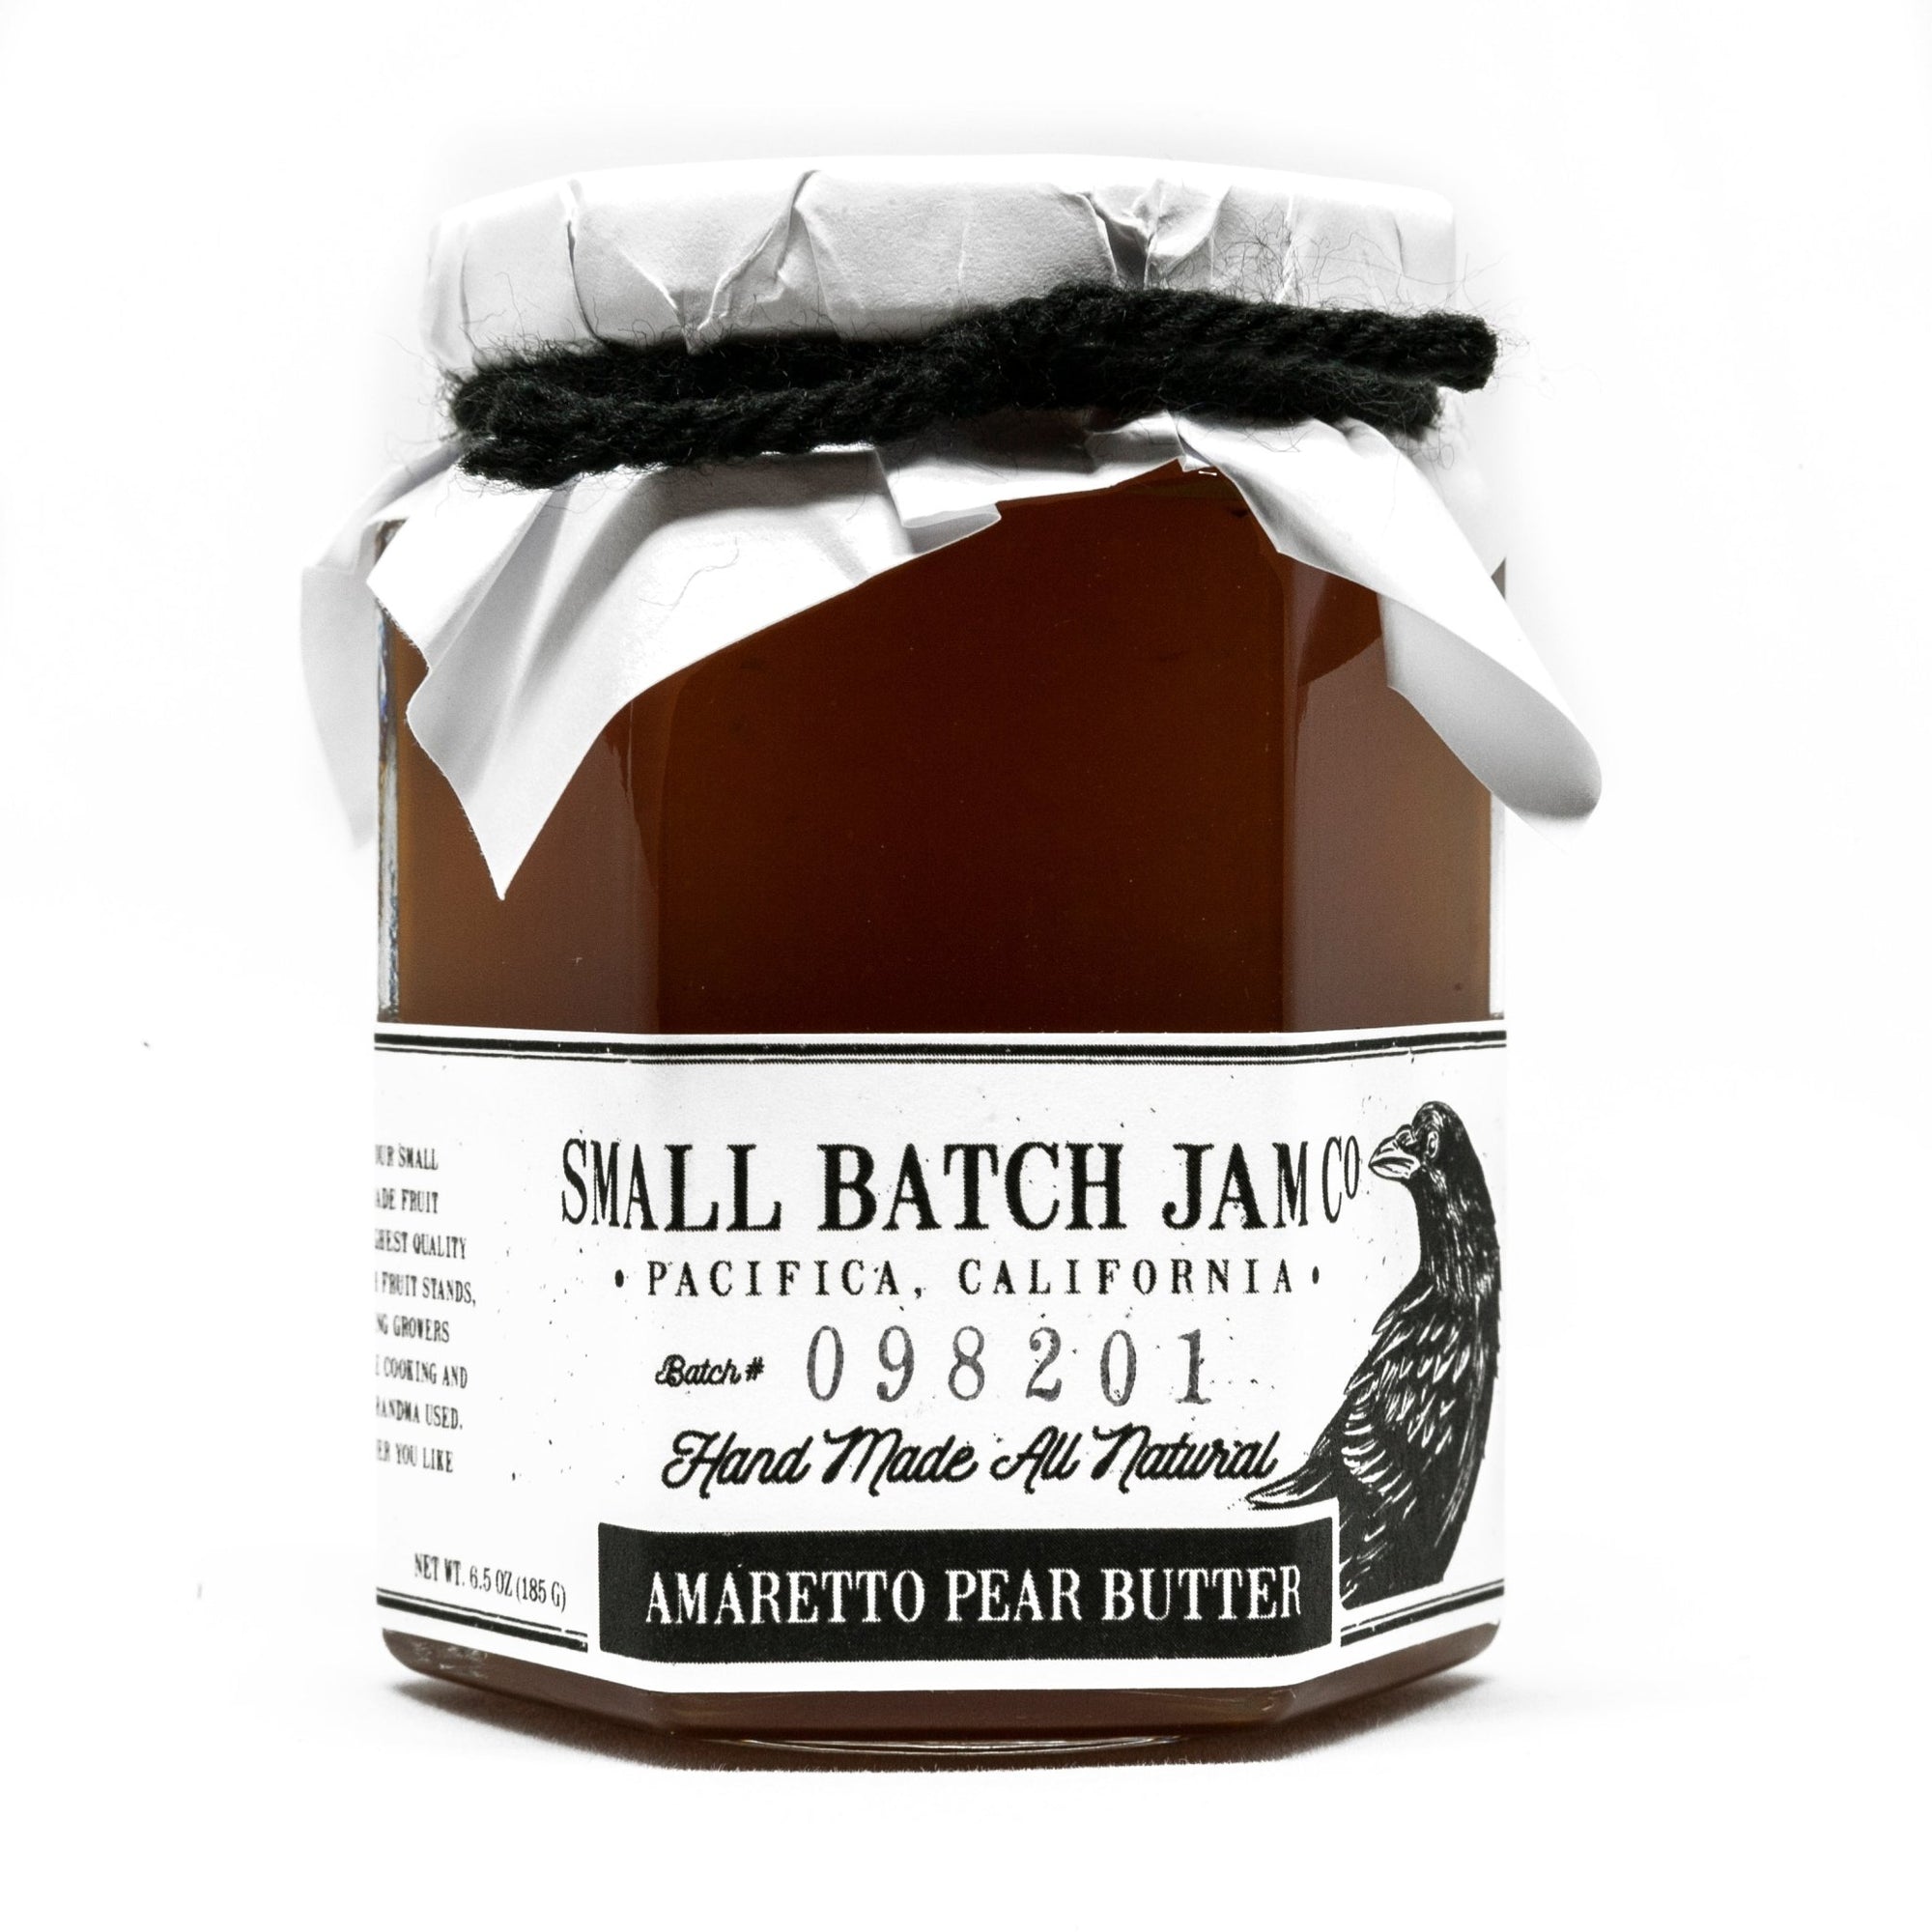 Amaretto Pear Butter - Small Batch Jam Co